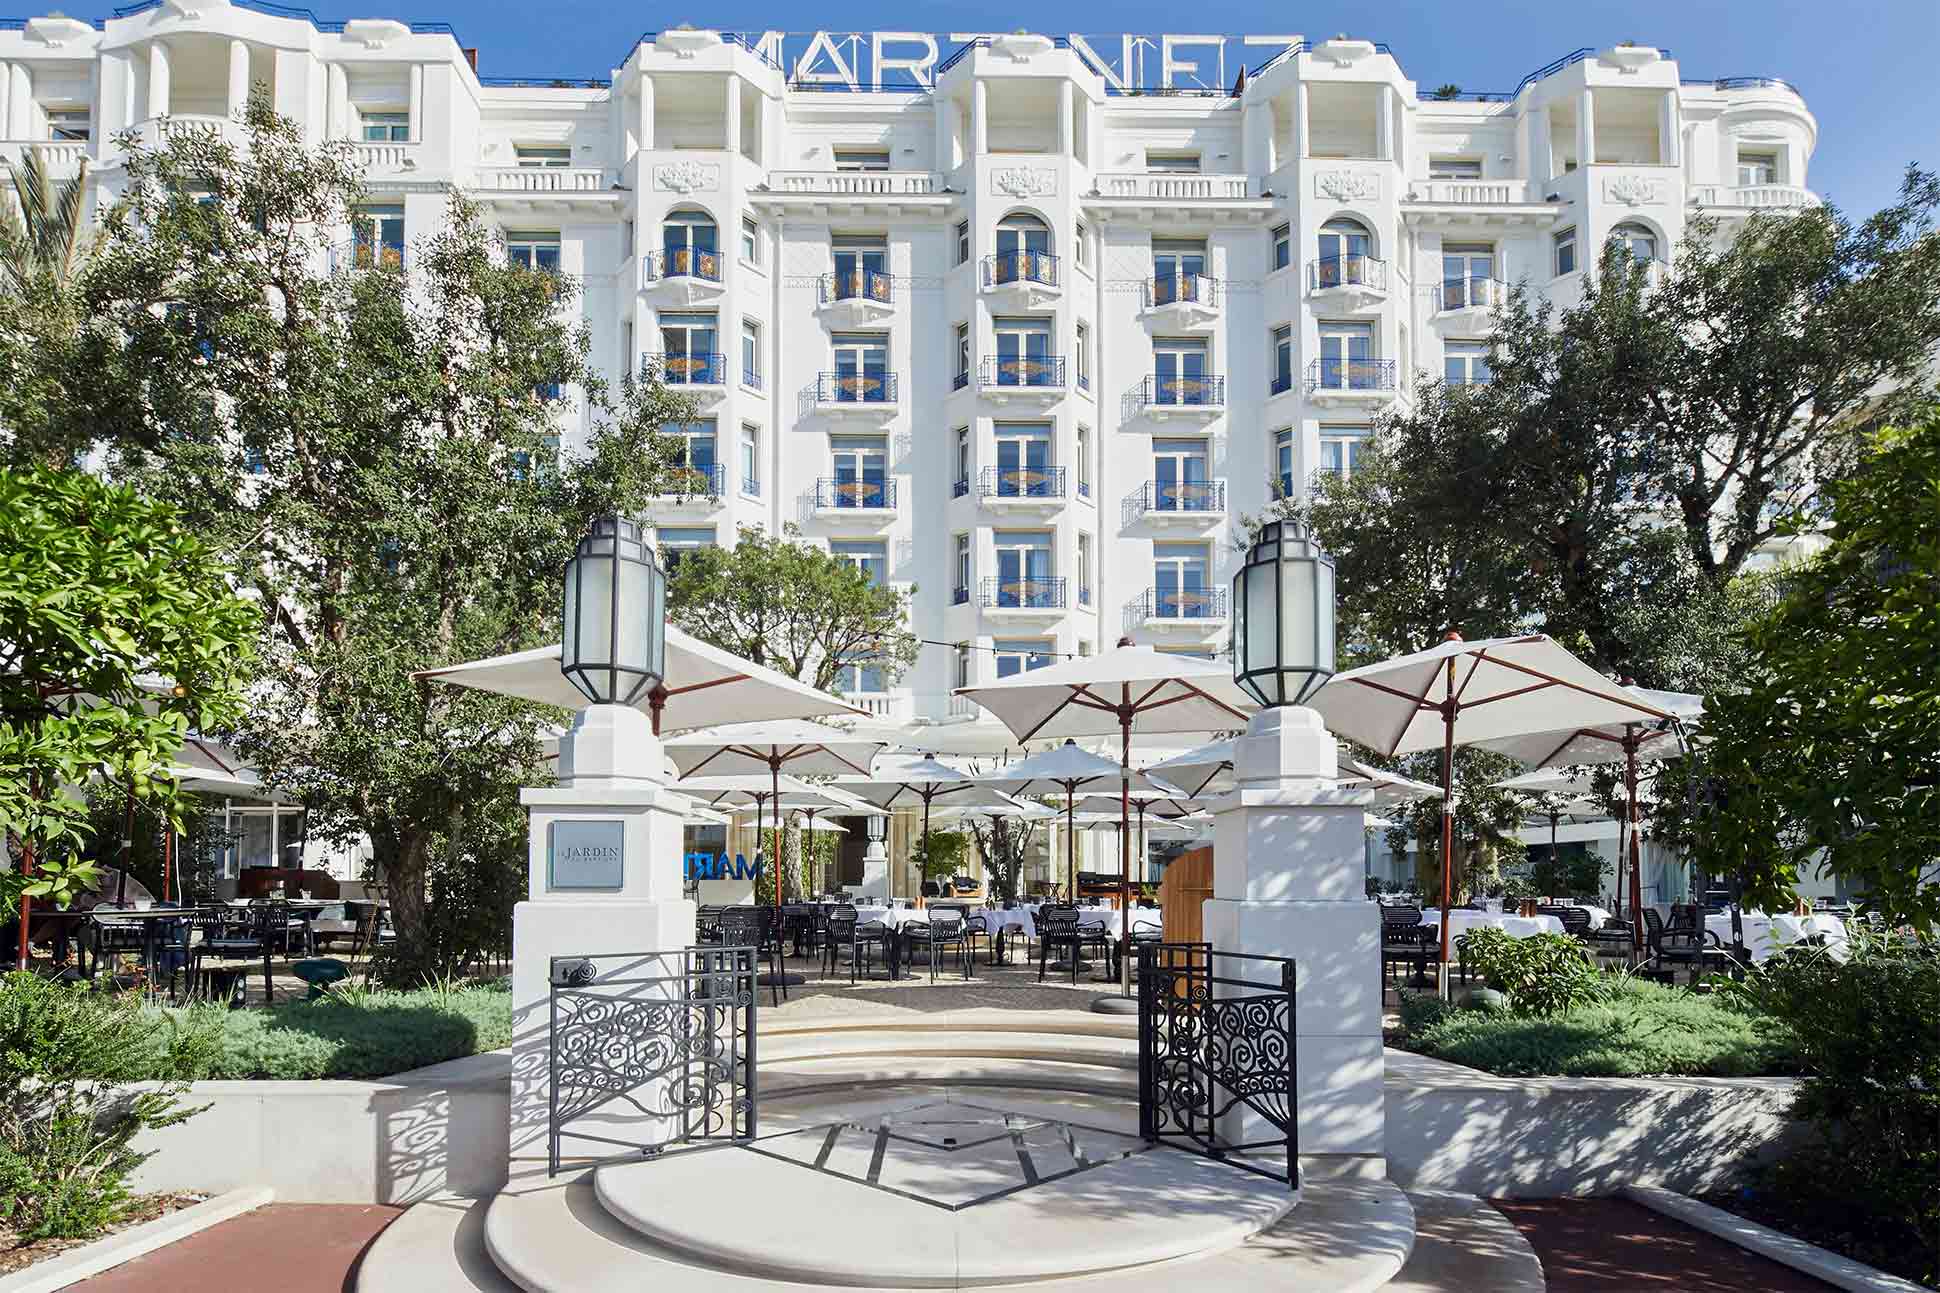 Hotel Martinez La Plage, Cannes, France